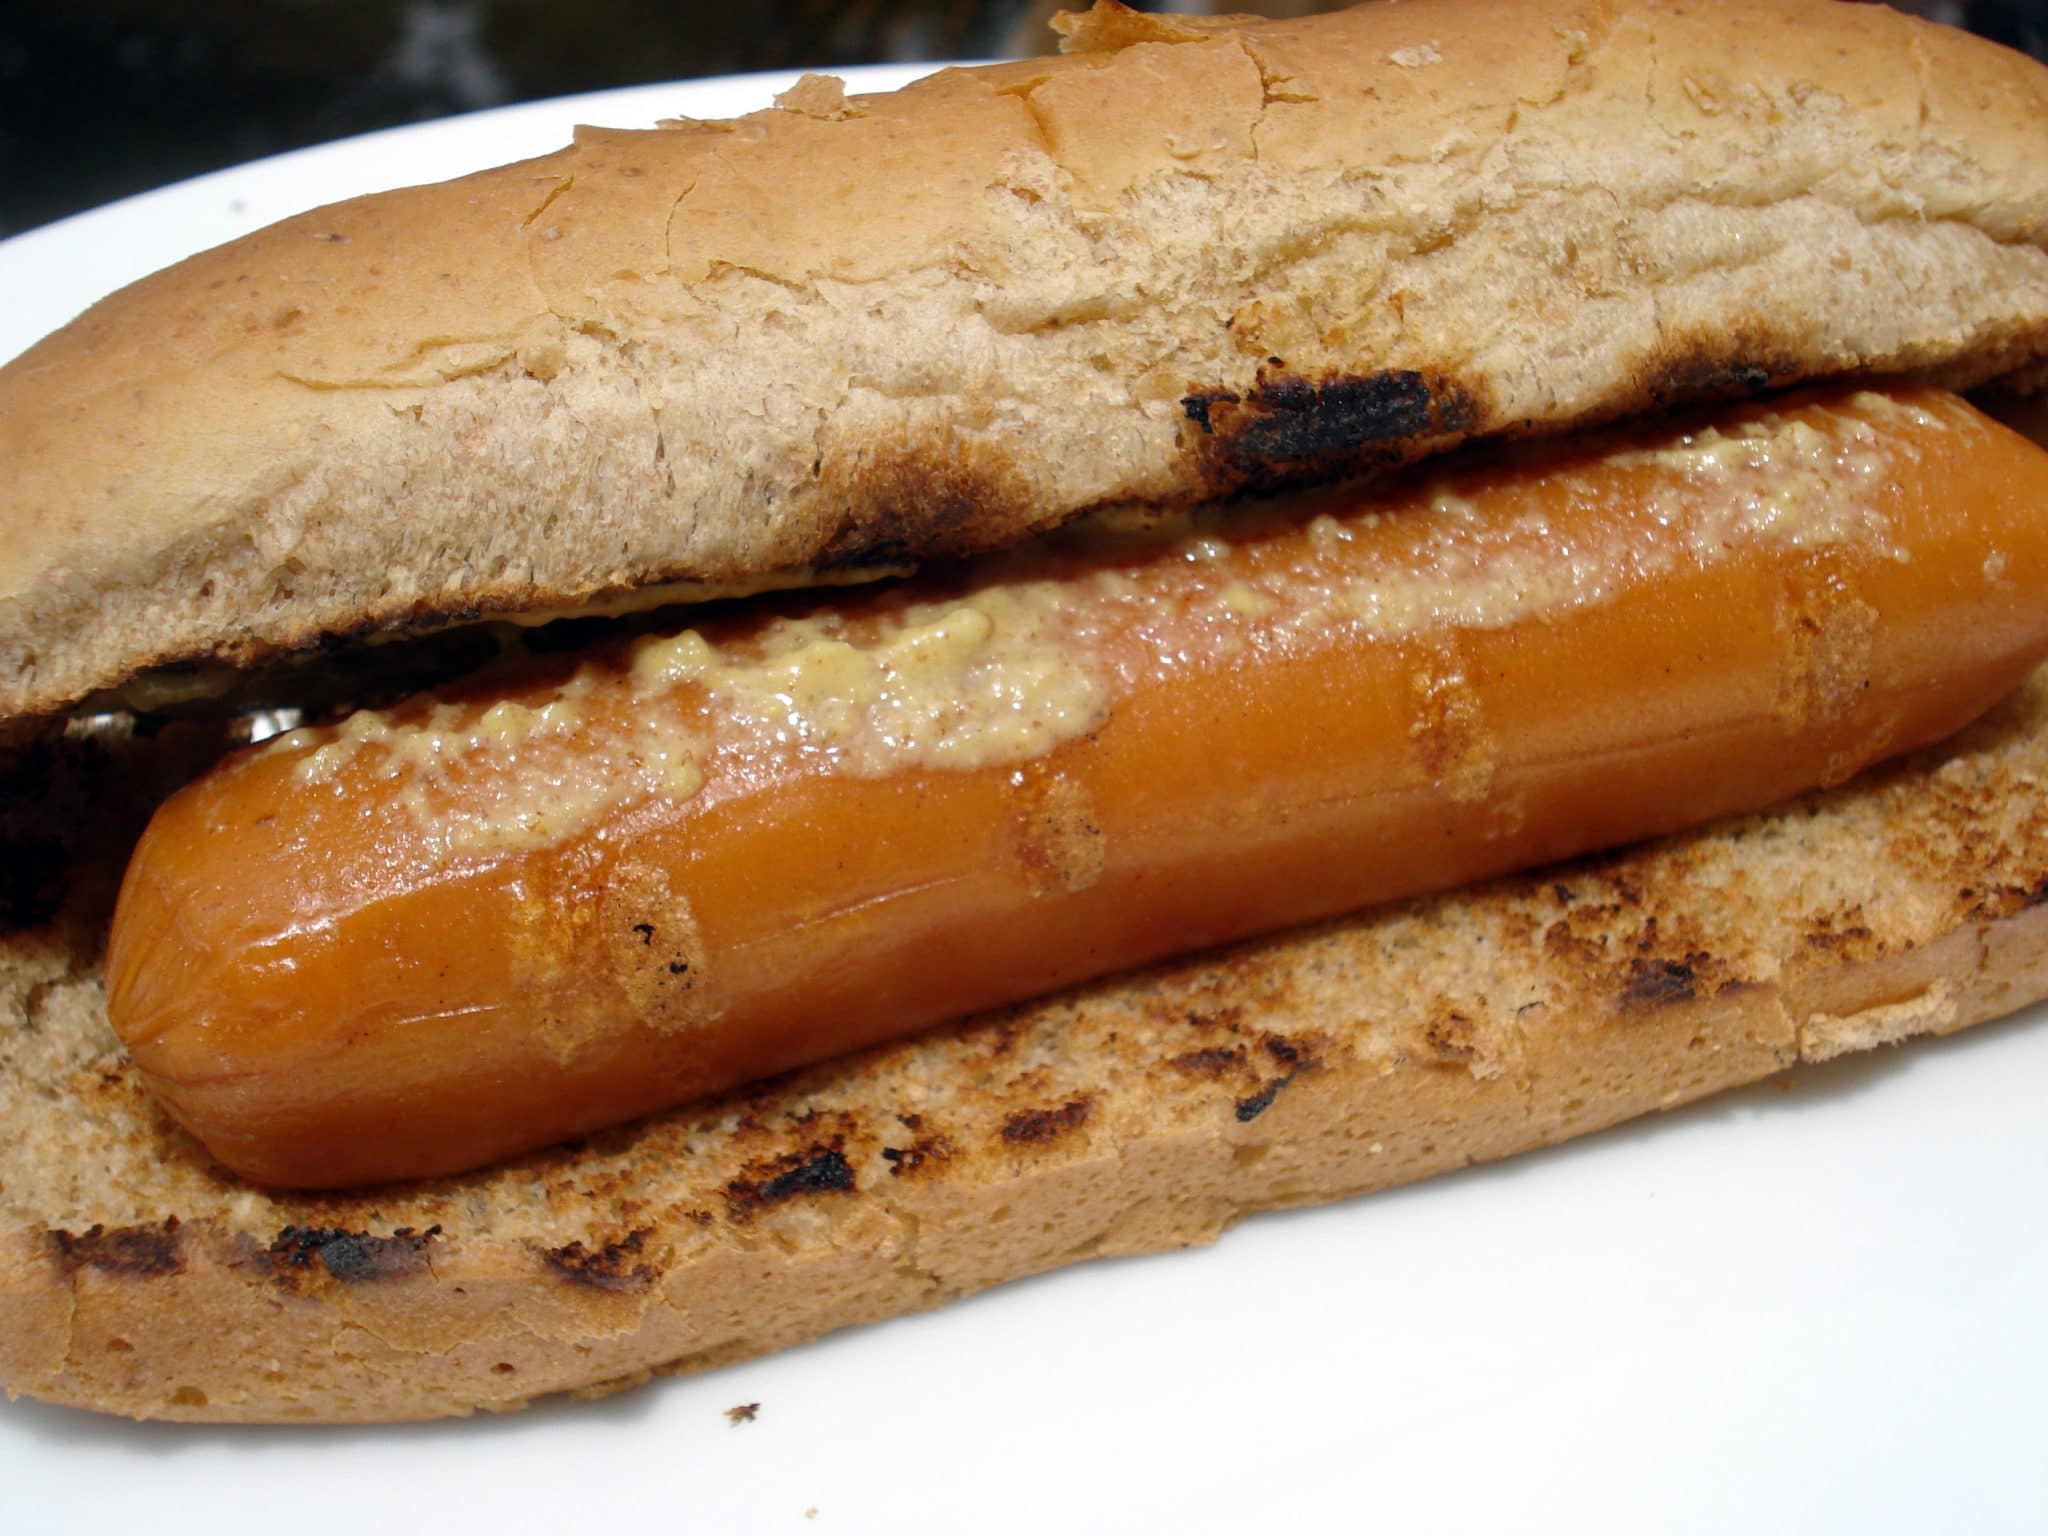 Vegan hotdog in a grilled, whole-wheat bun